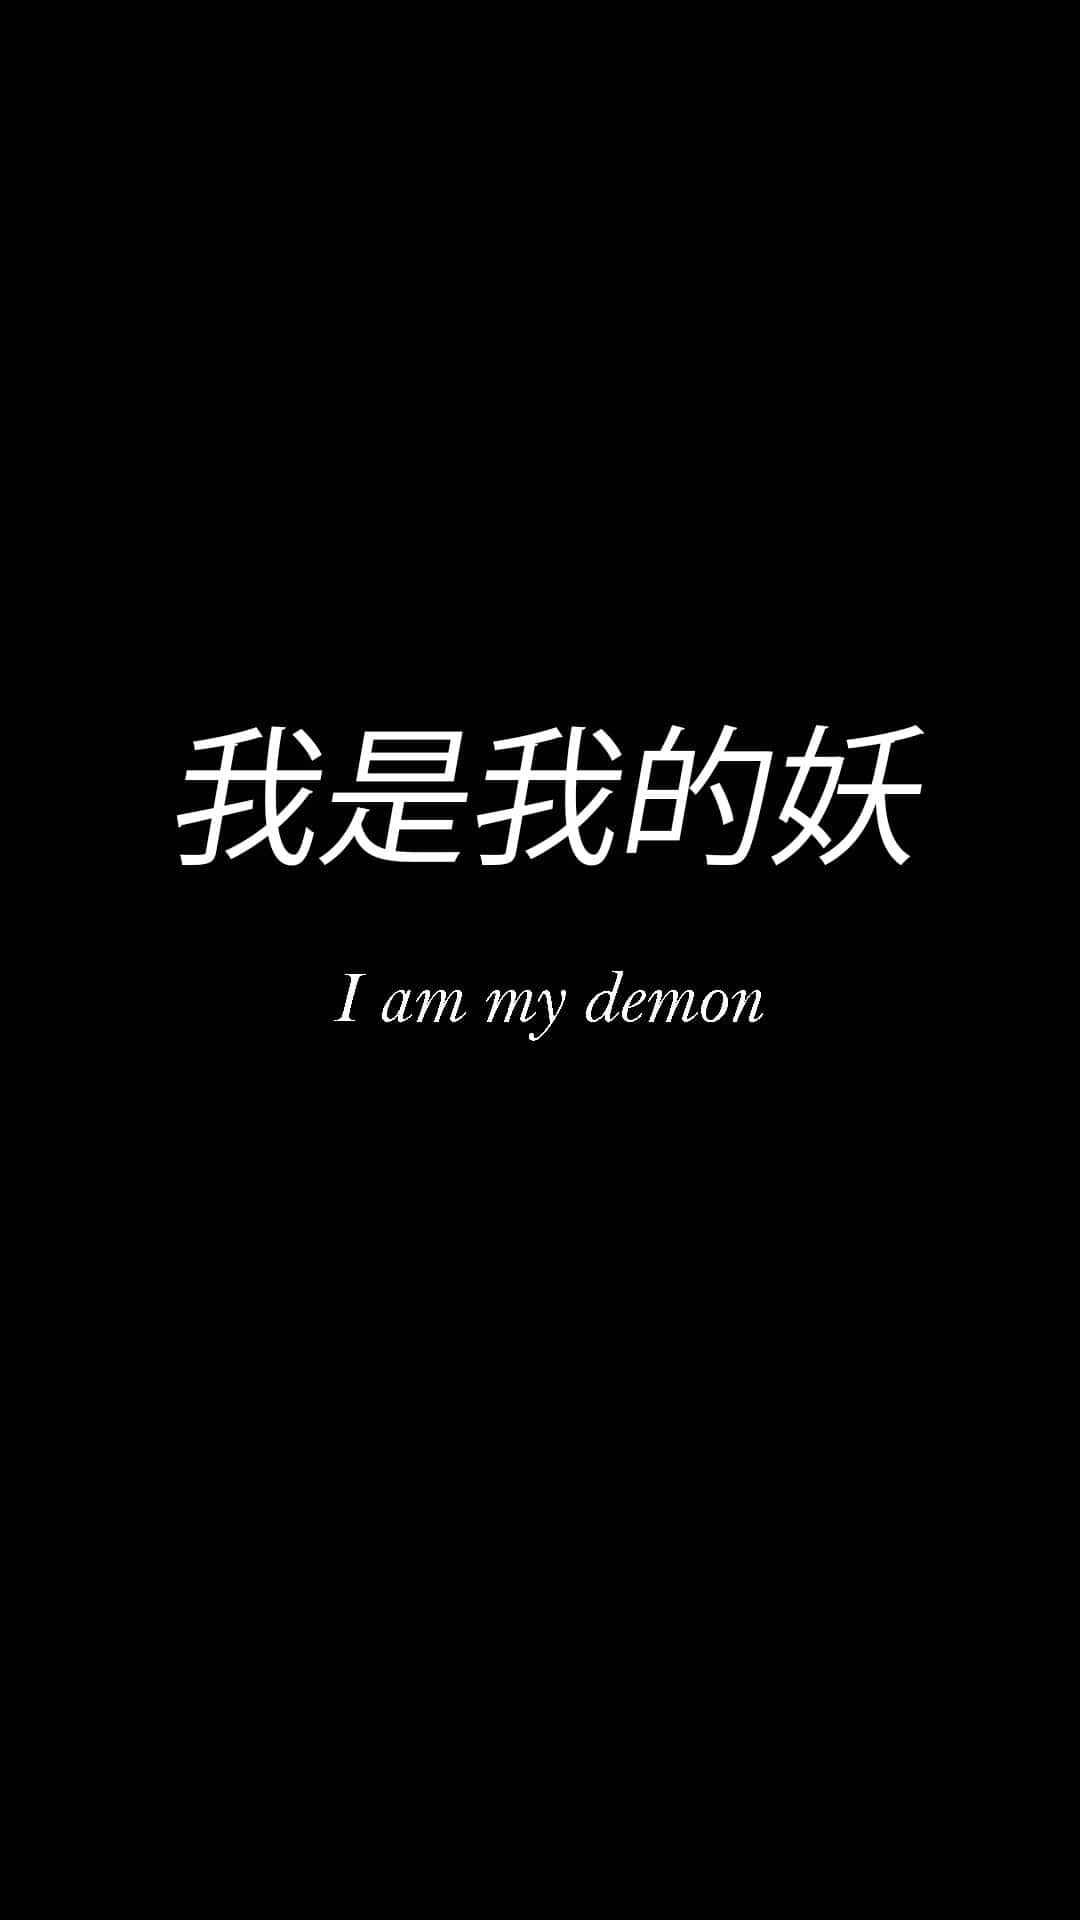 Japanese_ Demon_ Aesthetic_ Quote Wallpaper